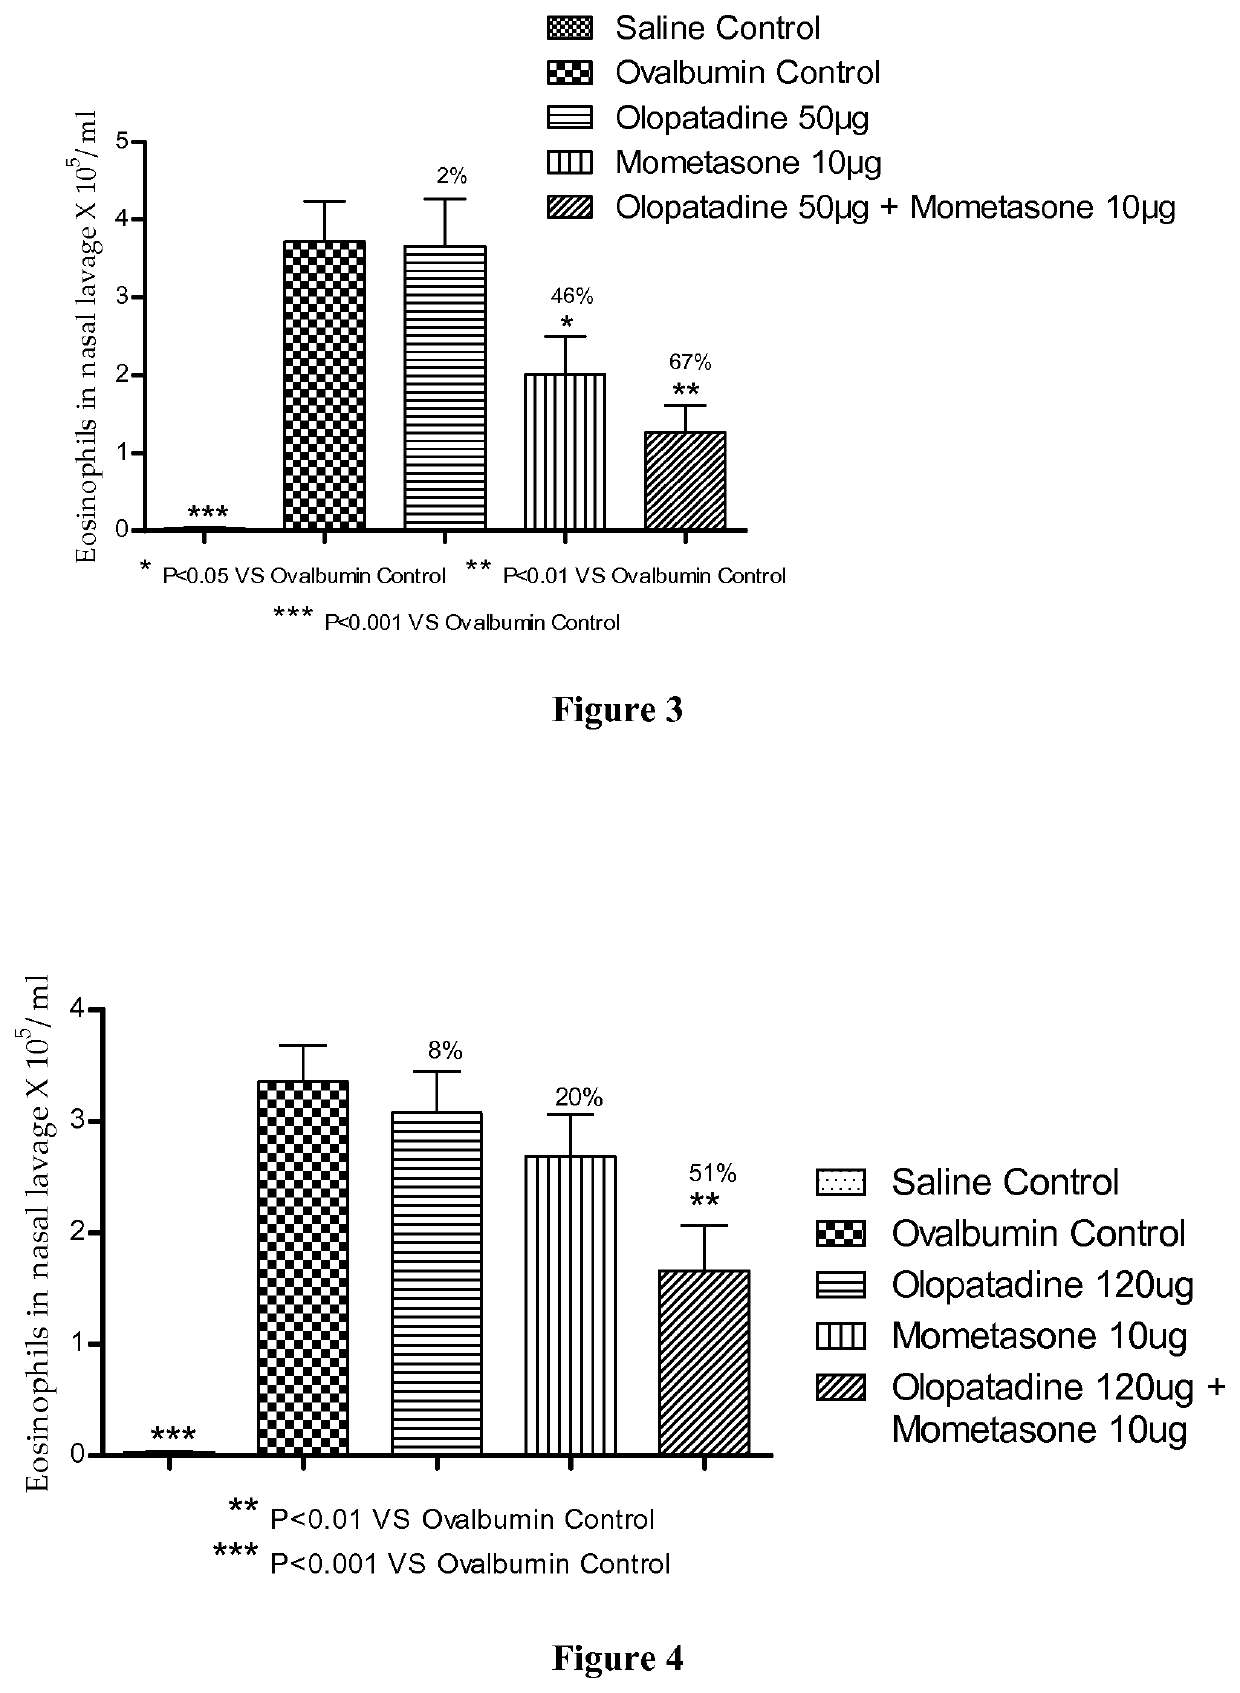 Treatment of allergic rhinitis using a combination of mometasone and olopatadine